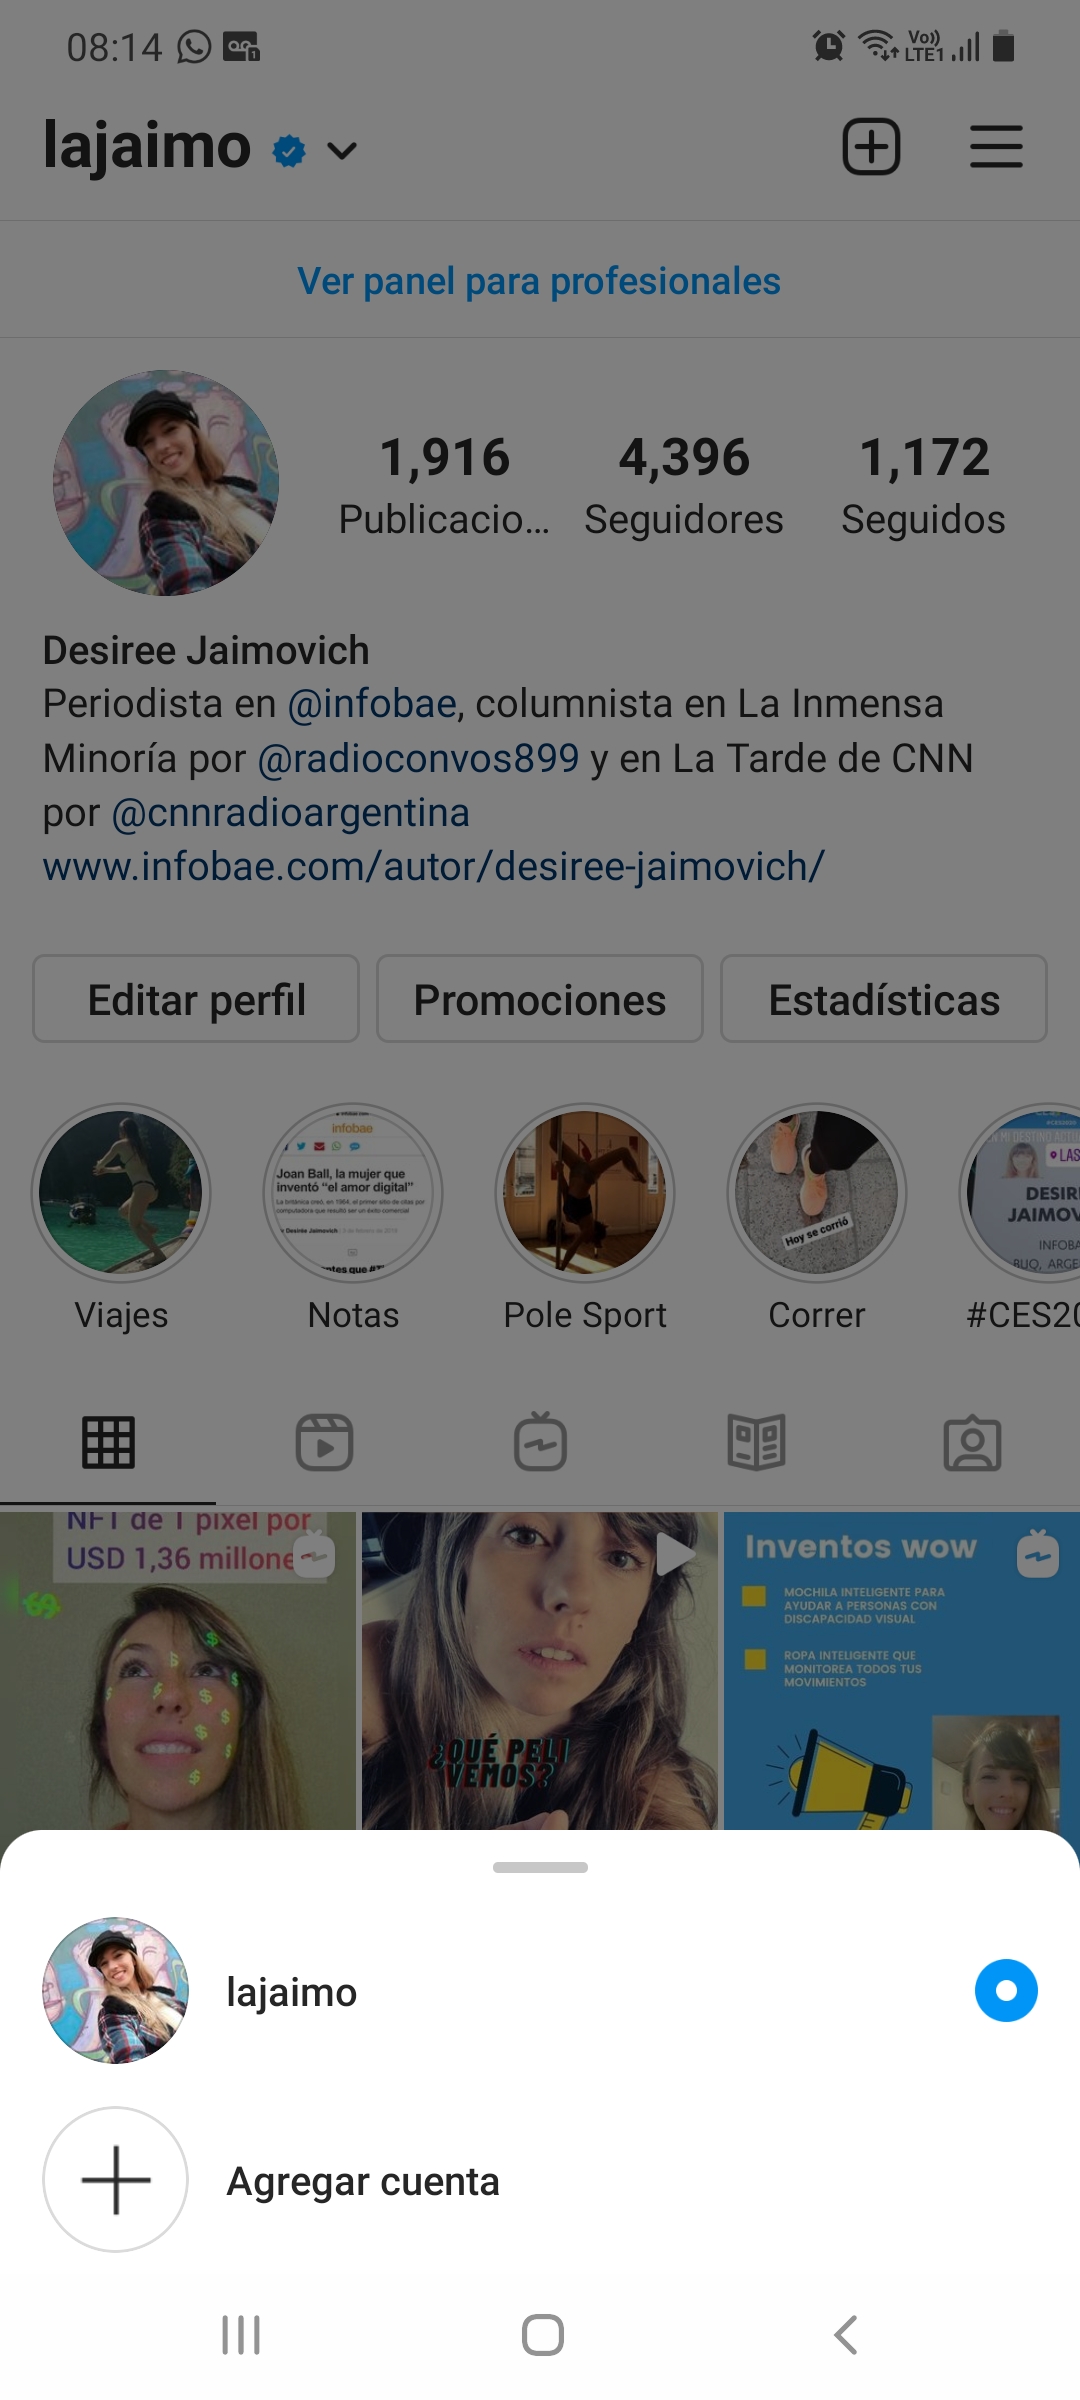 Instagram permite administrar diferentes perfiles